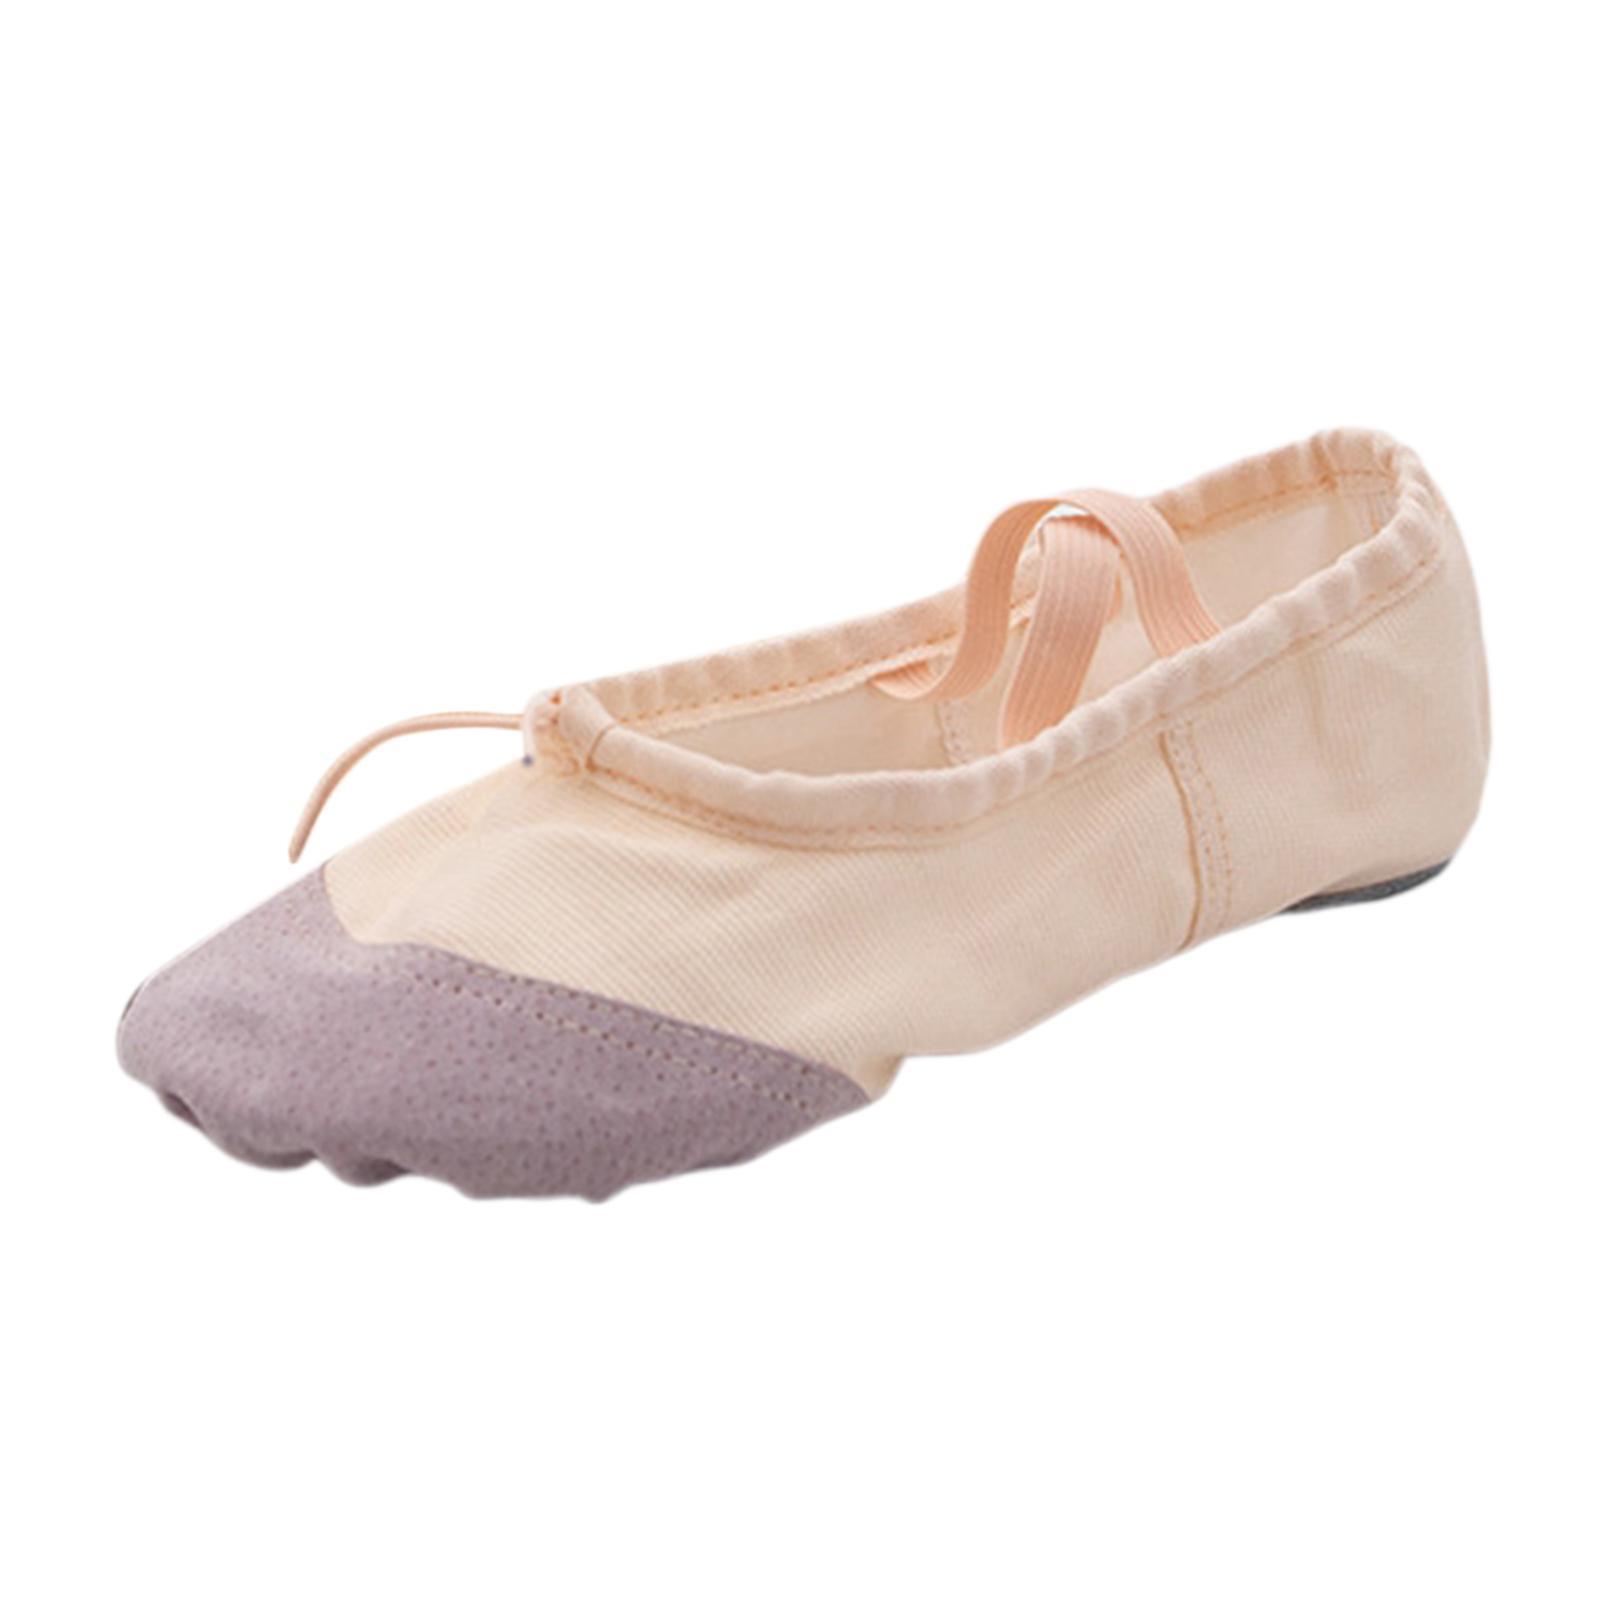 Women Ballet Shoes Low Heel Closed Toe Canvas Soft Sole Adults Dancing Shoes